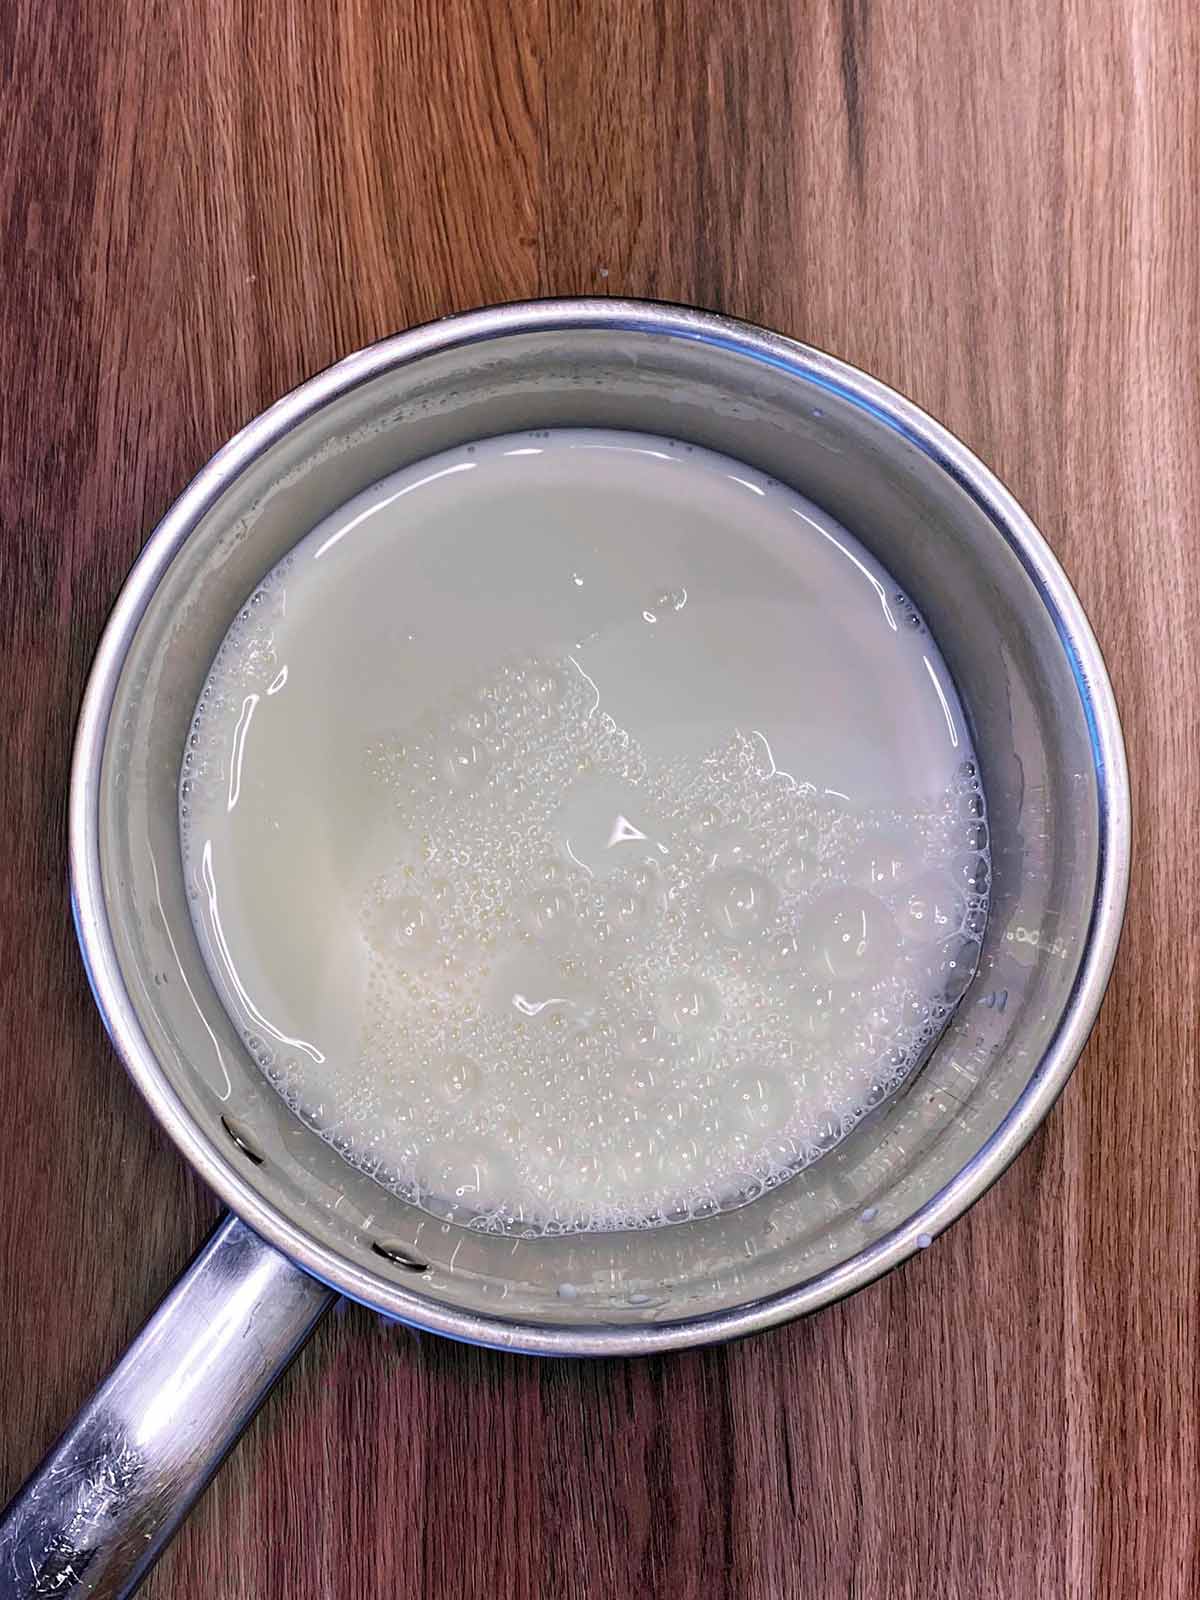 A saucepan containing milk.